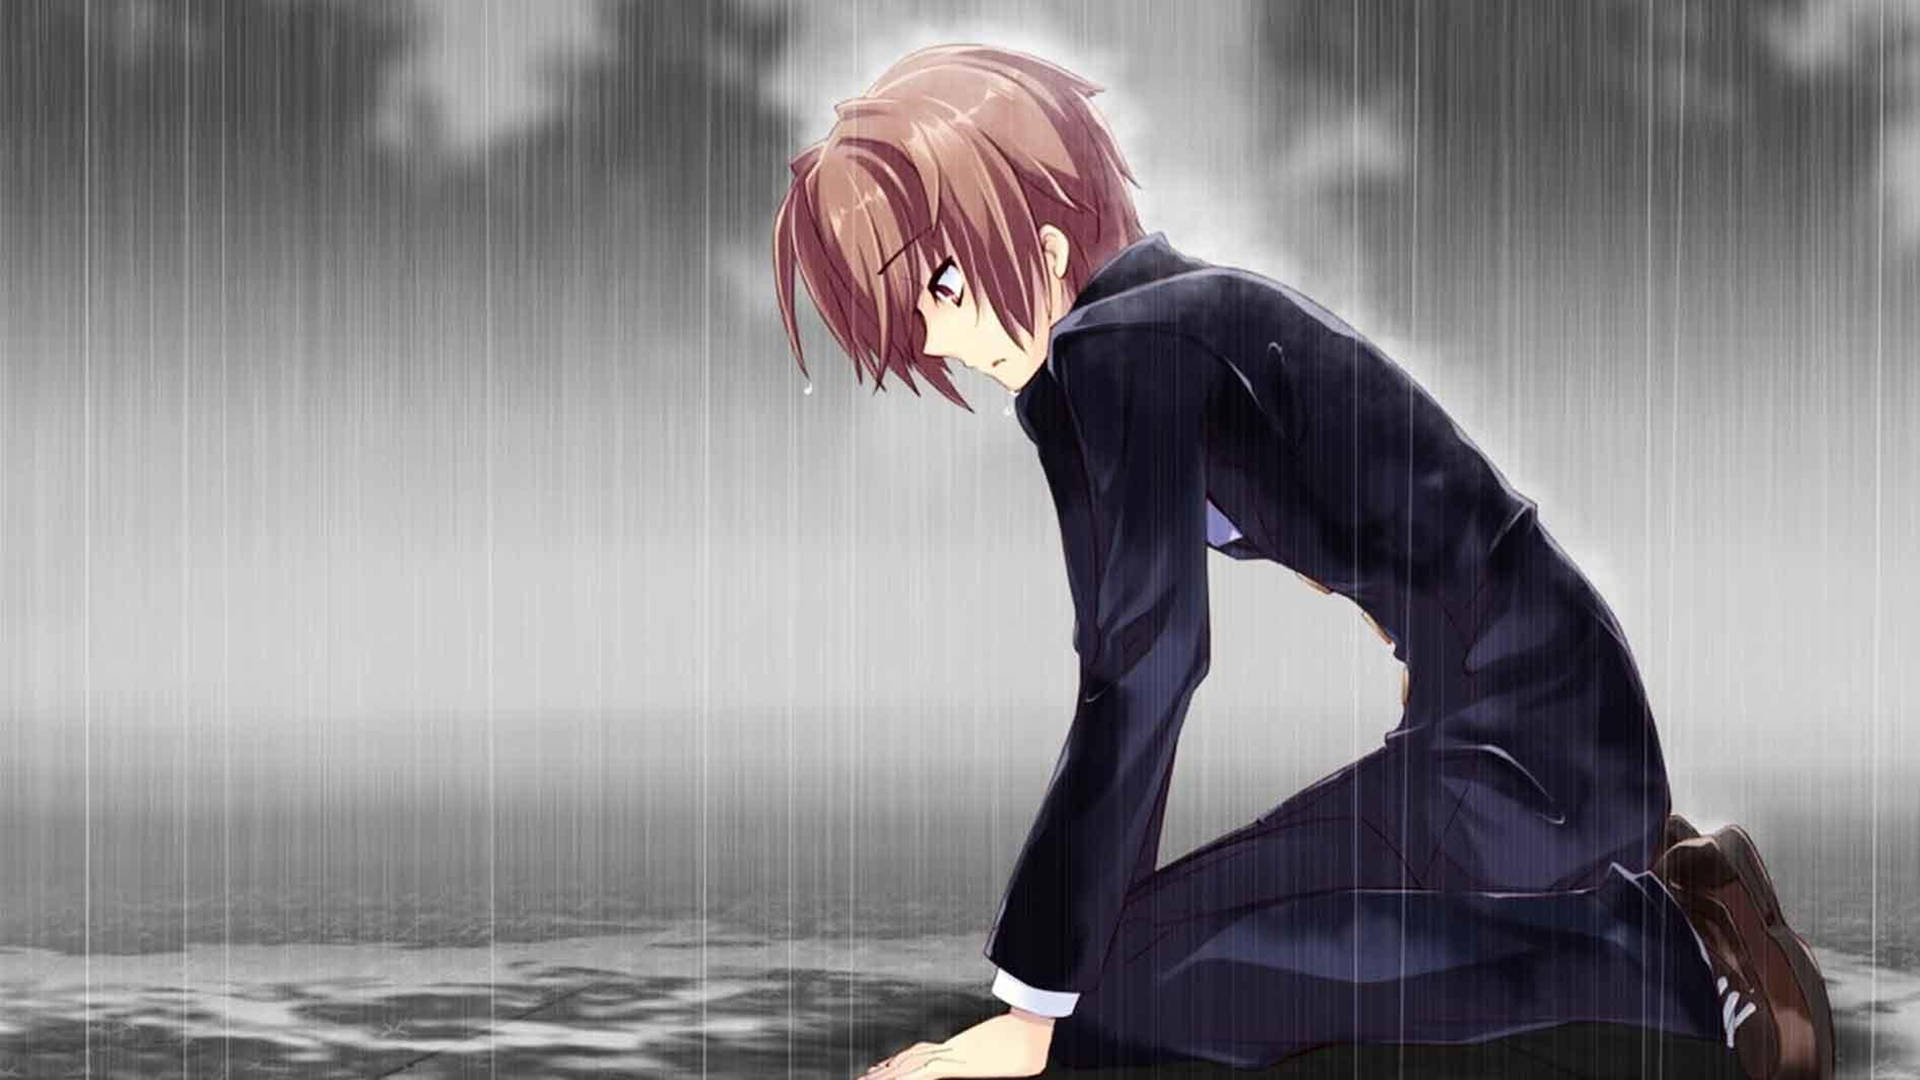 Download Sad Anime 4k Man On Knees Crying Wallpaper 